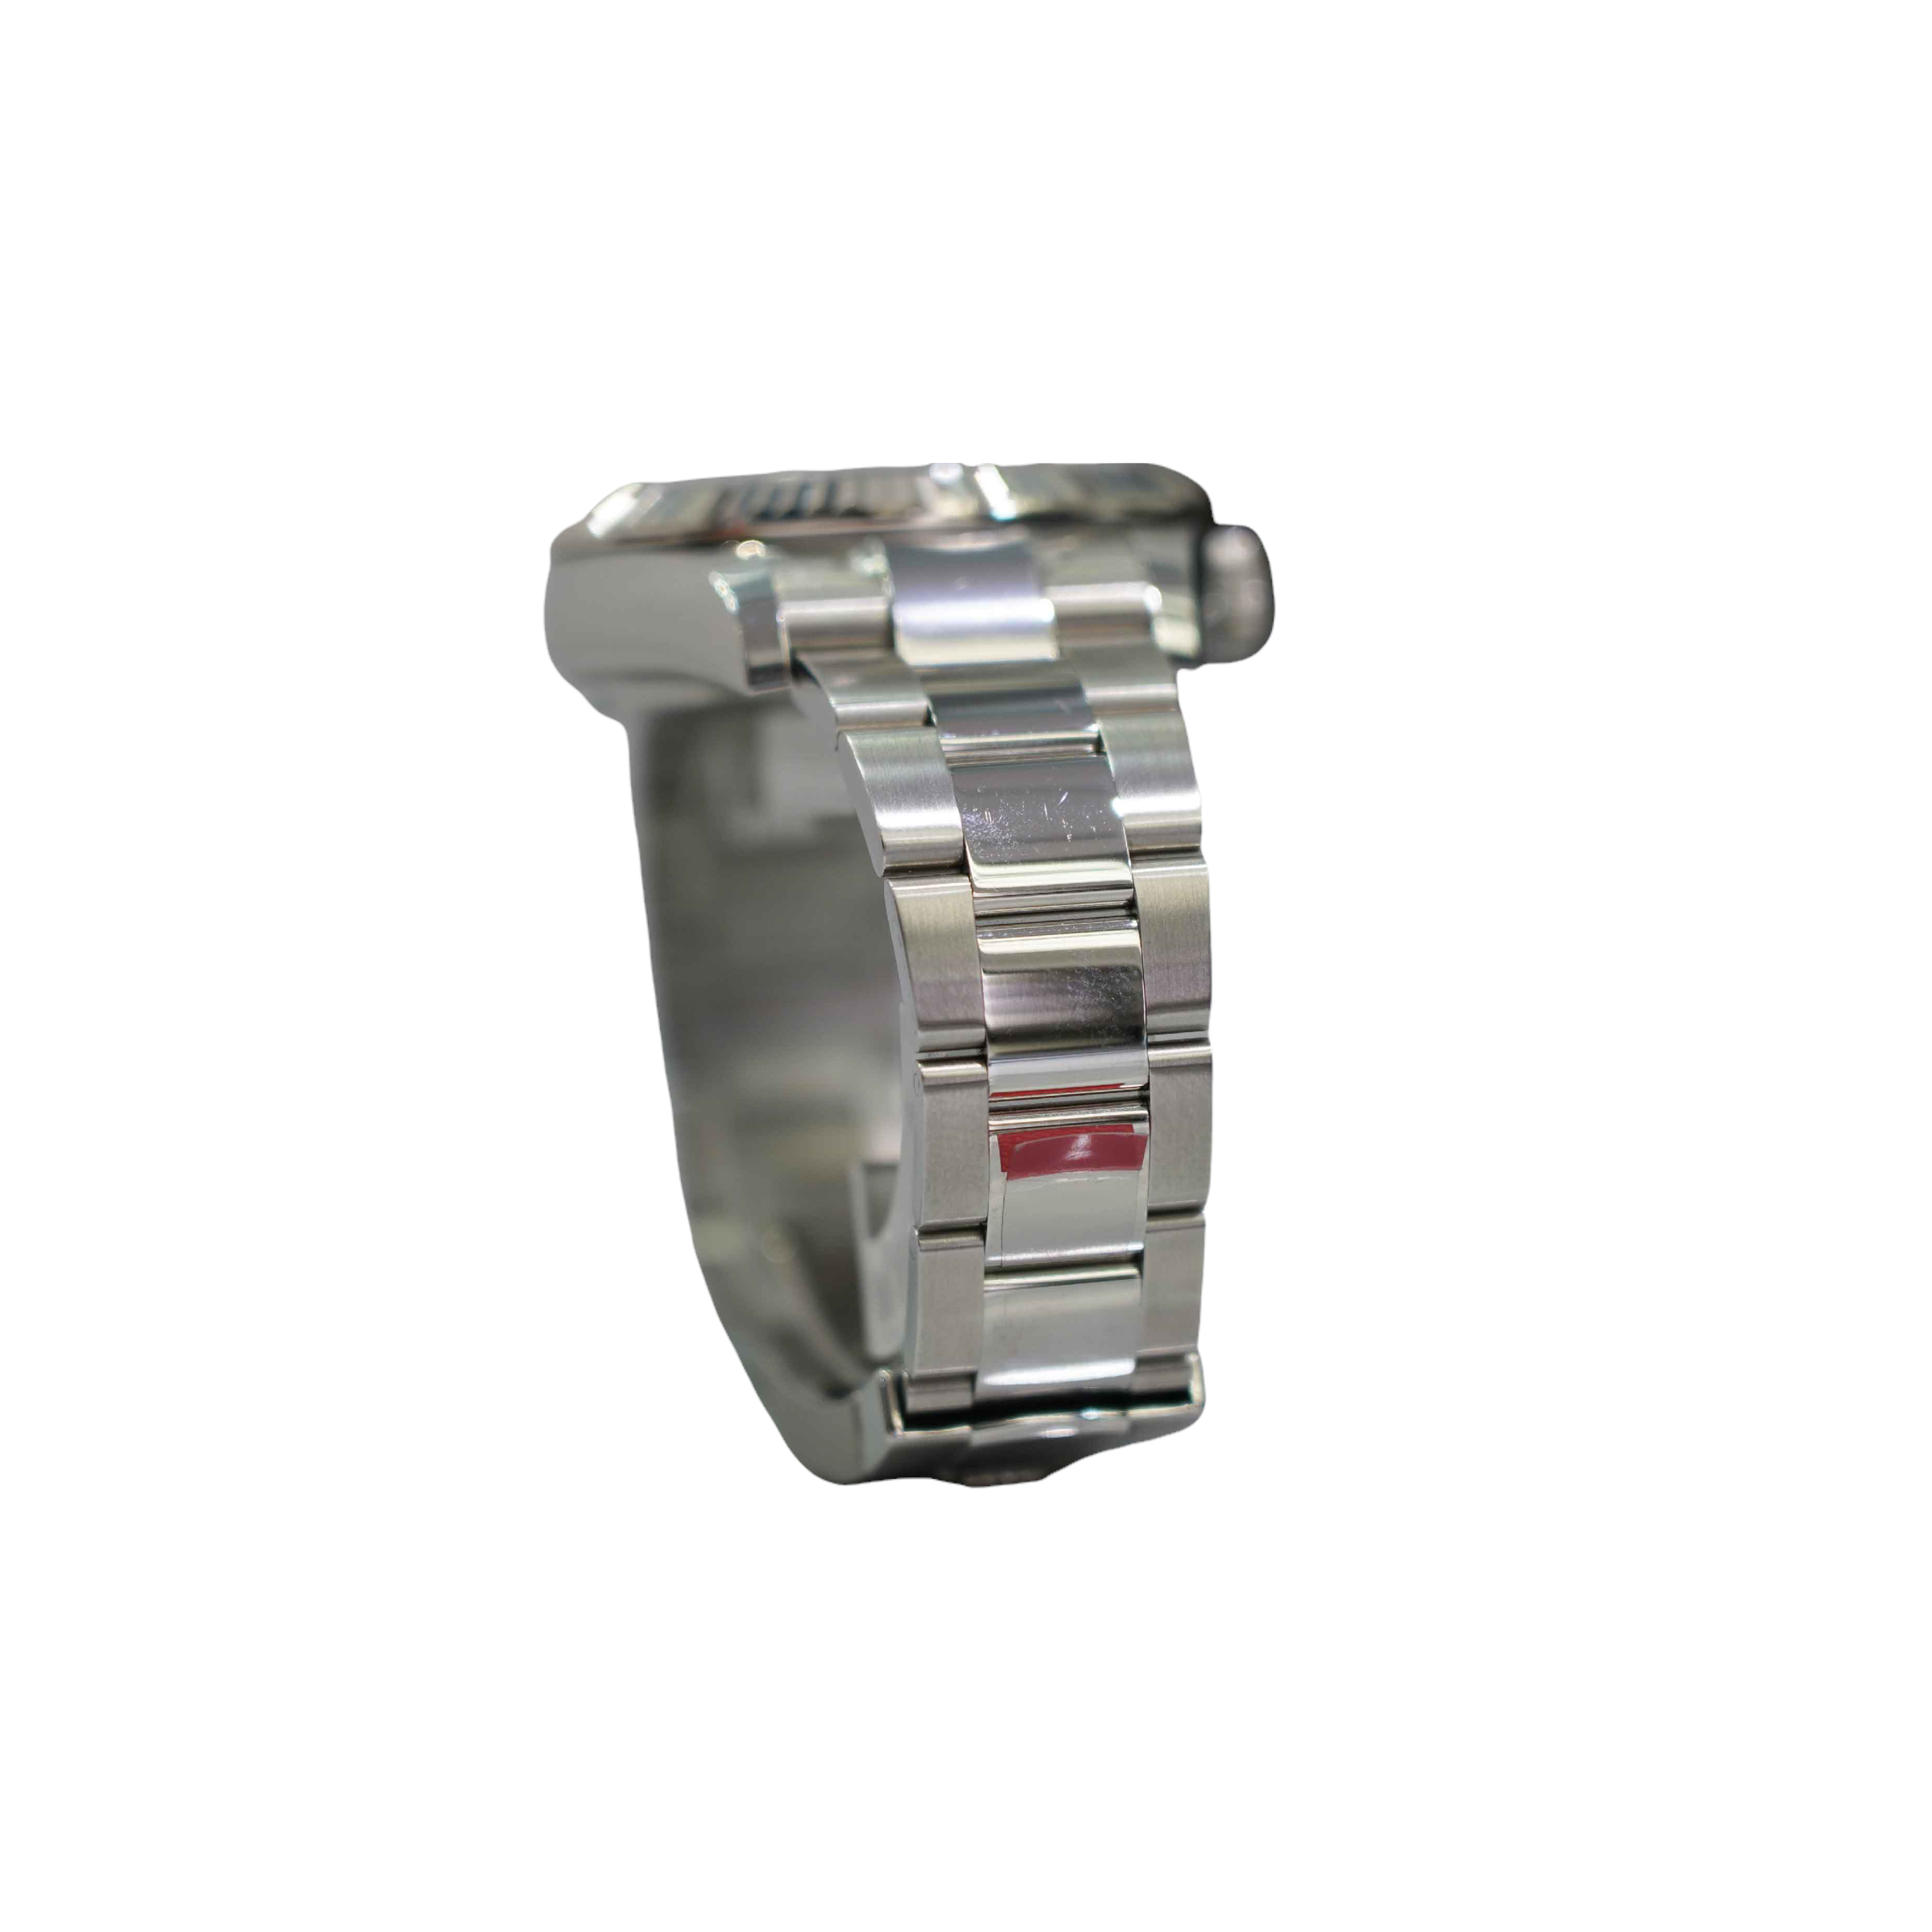 Rolex 42MM Sky- Dweller Watch 18K Gold Stainless Steel 326934 Card dated 2020